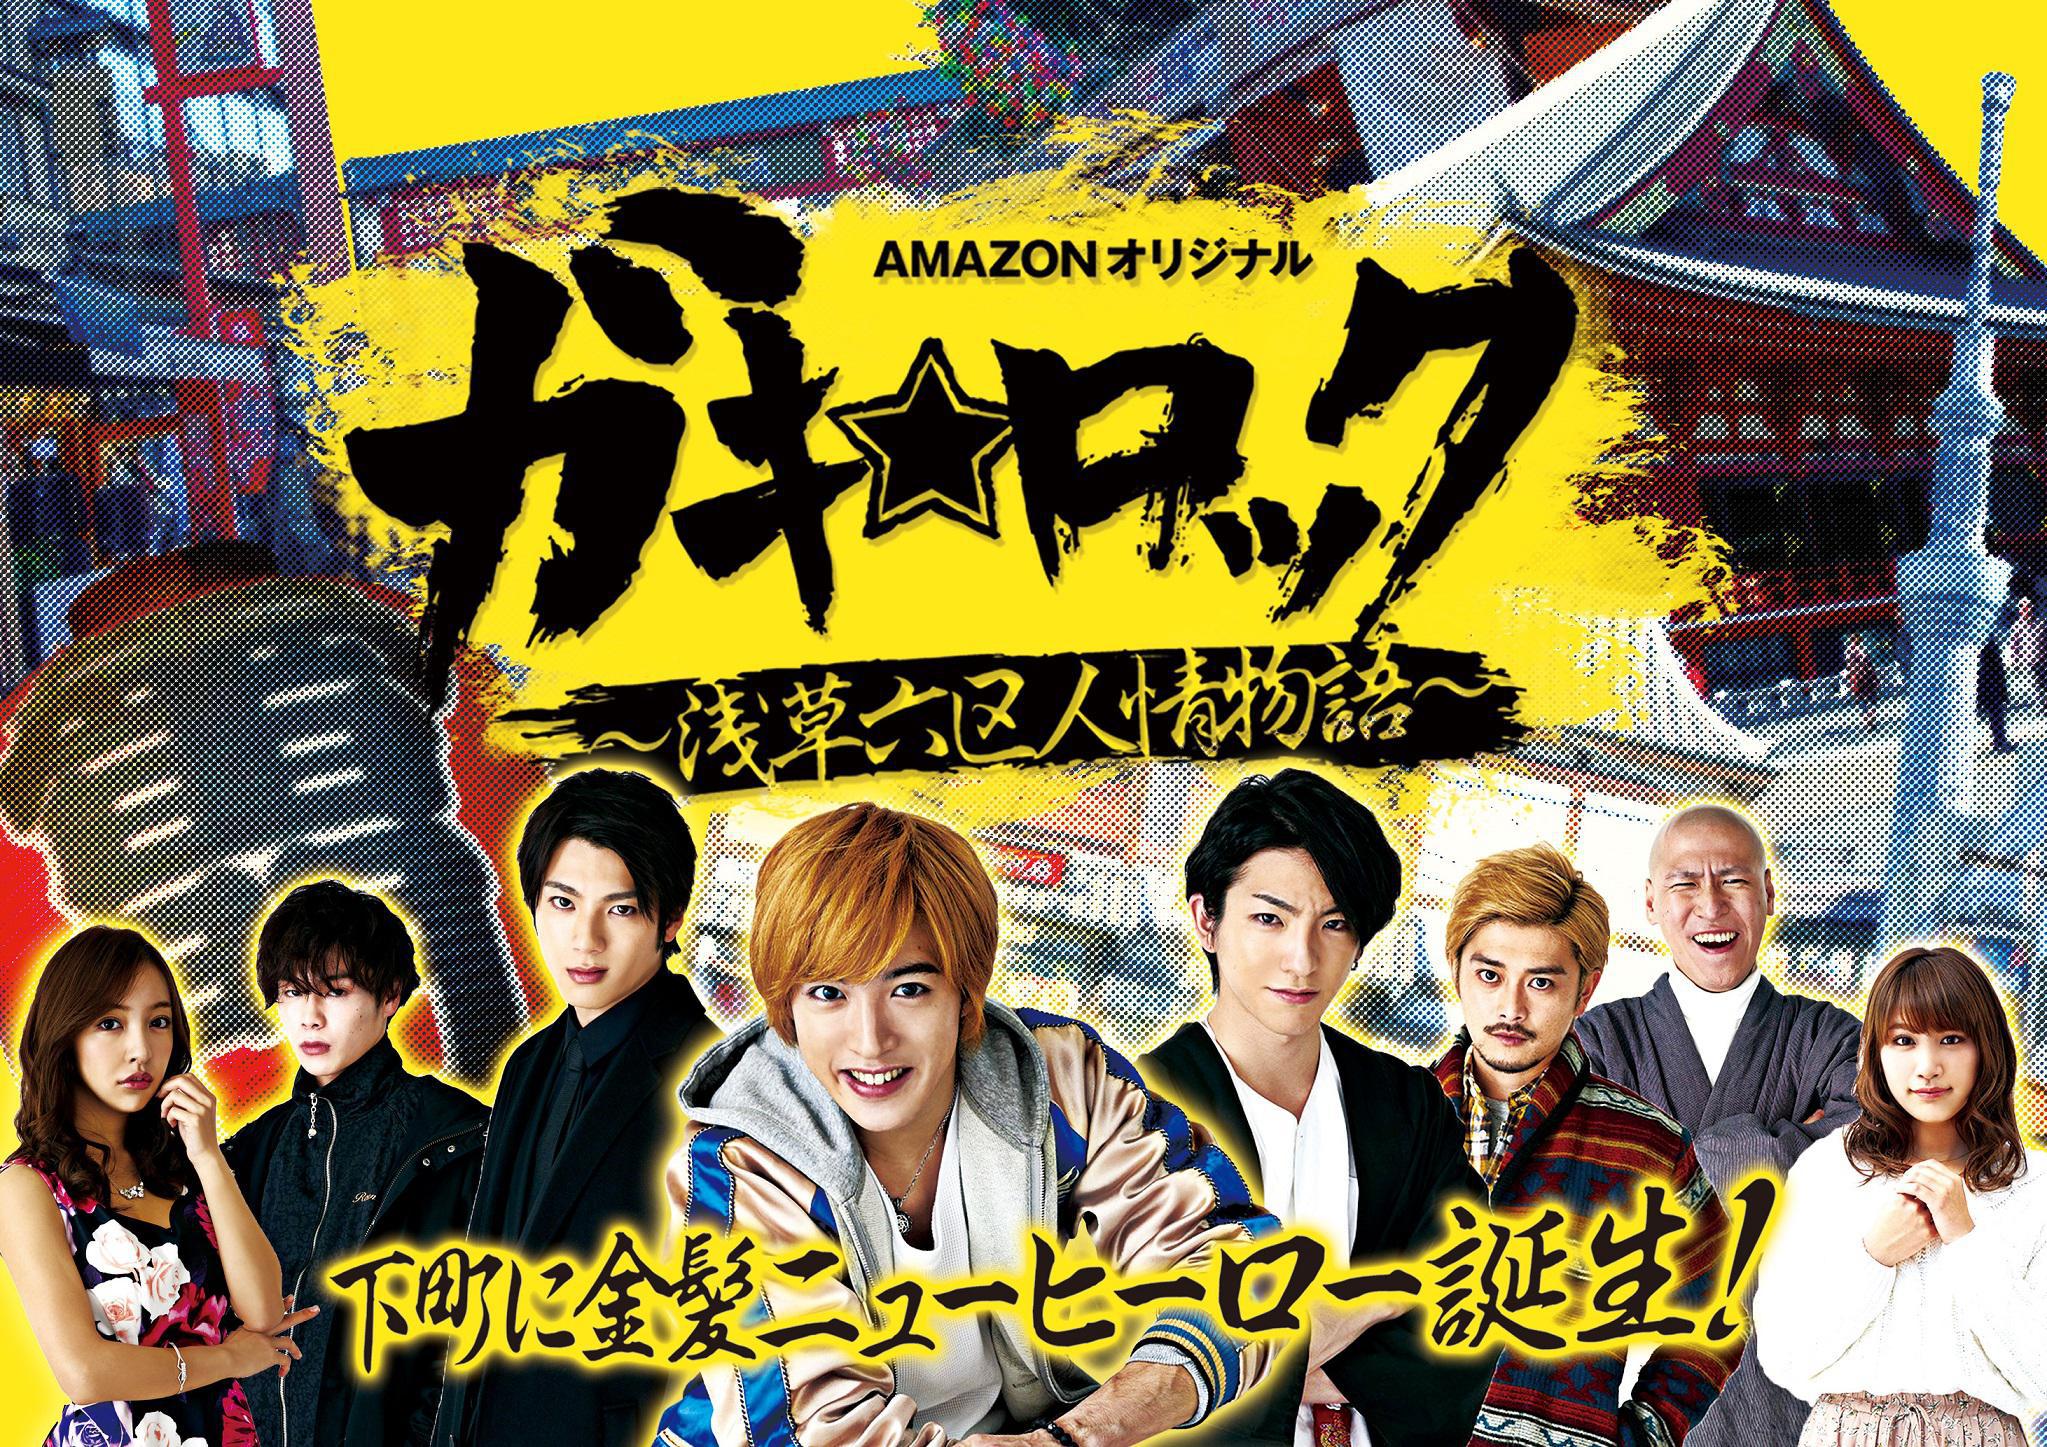 TV ratings for Gaki Rock: Asakusa Roku-ku Ninjo Monogatari in Australia. Amazon Prime Video TV series